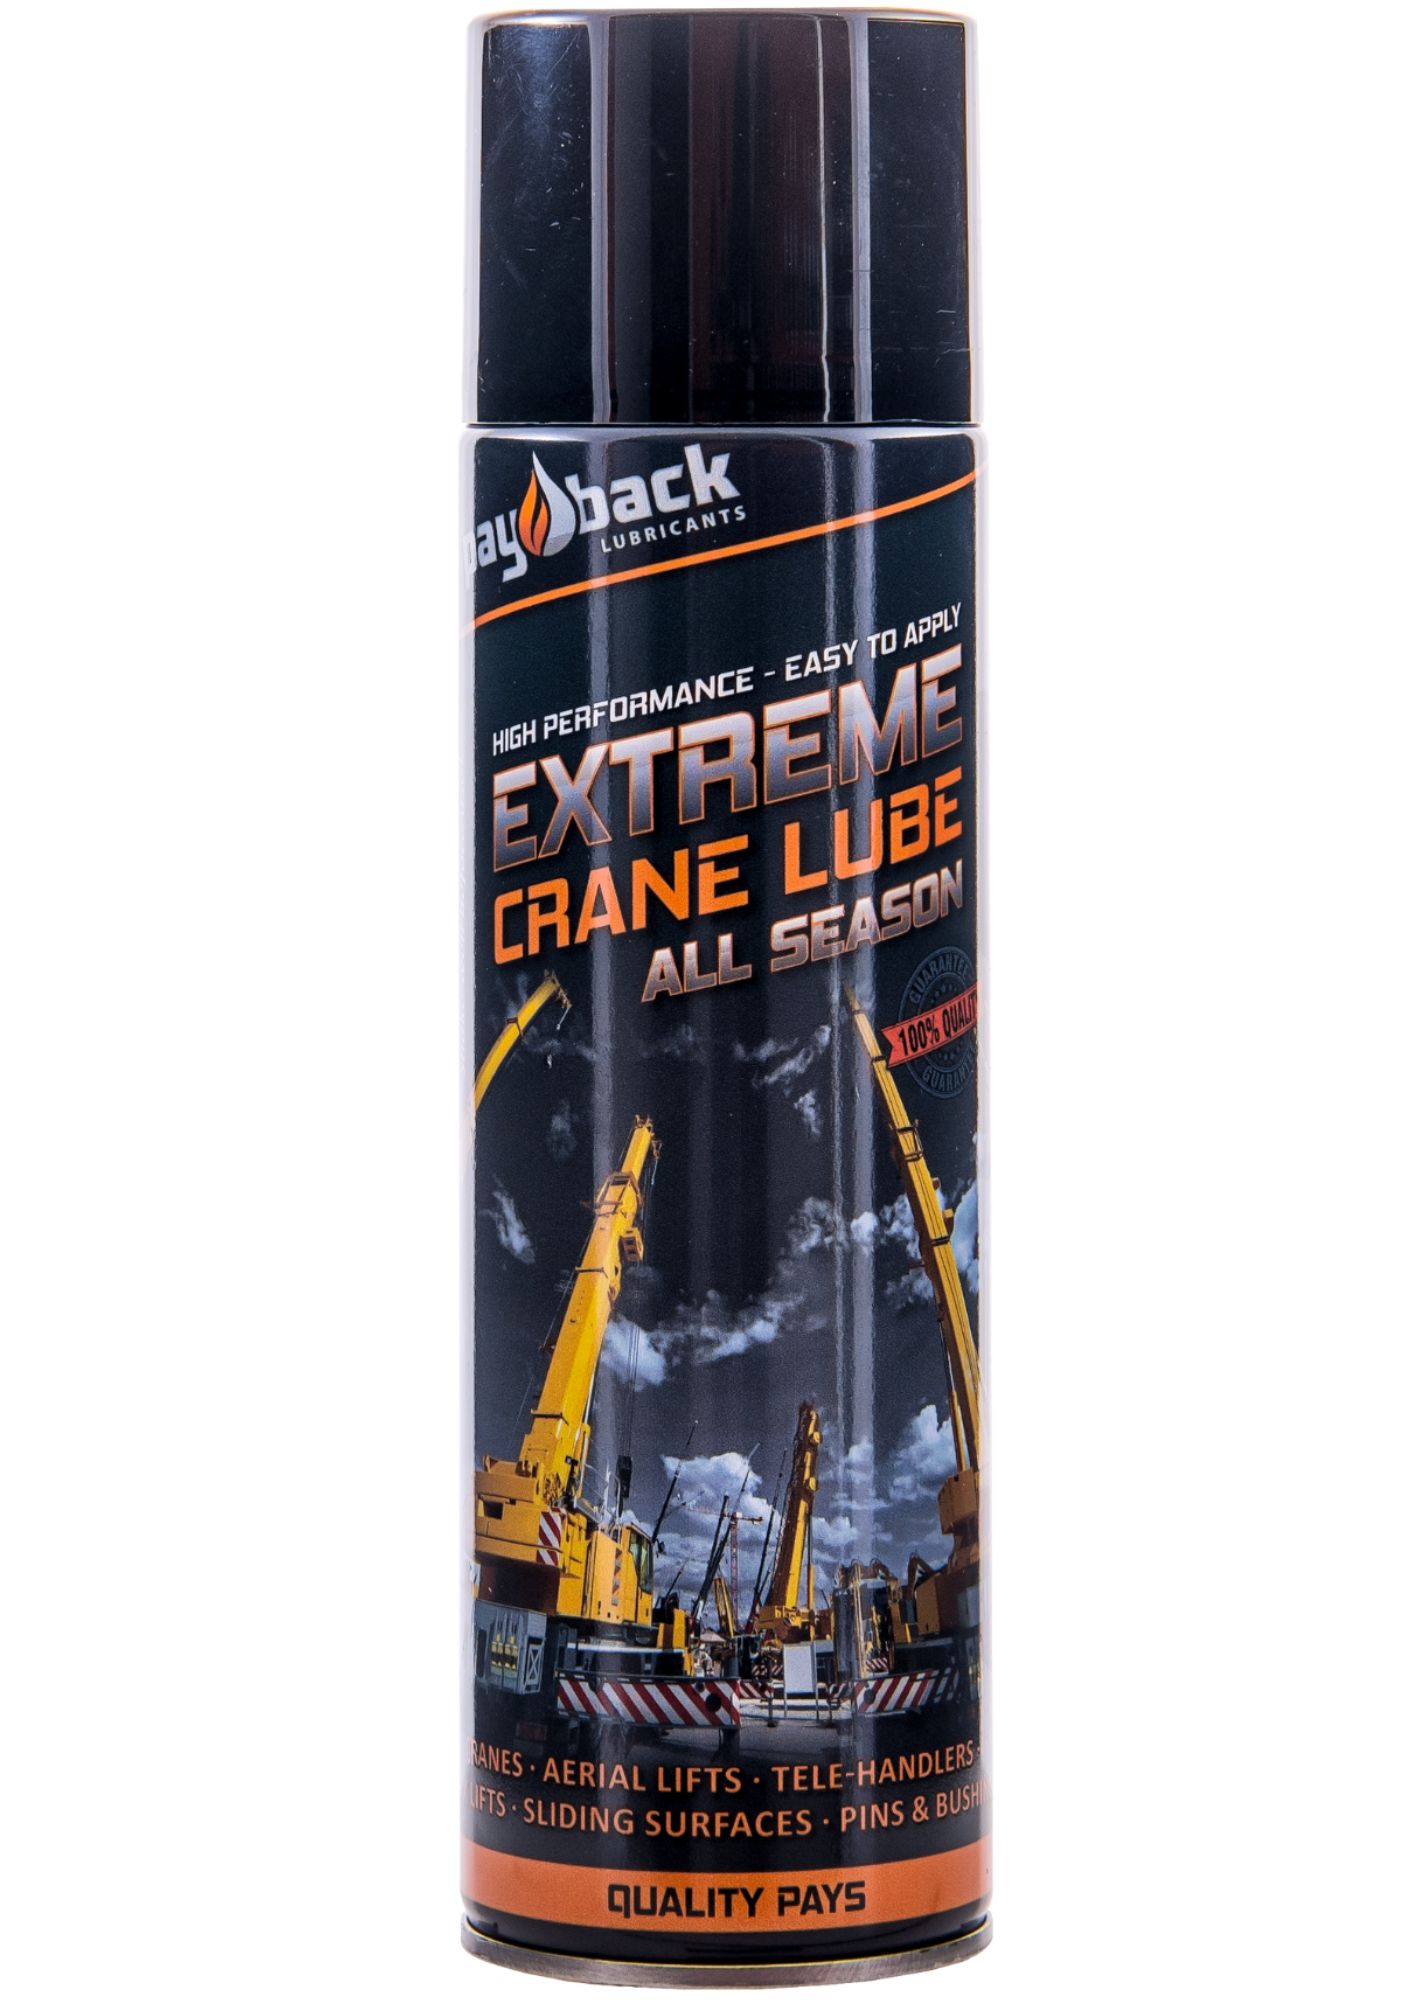 payback extreme crane lube all season 500ml